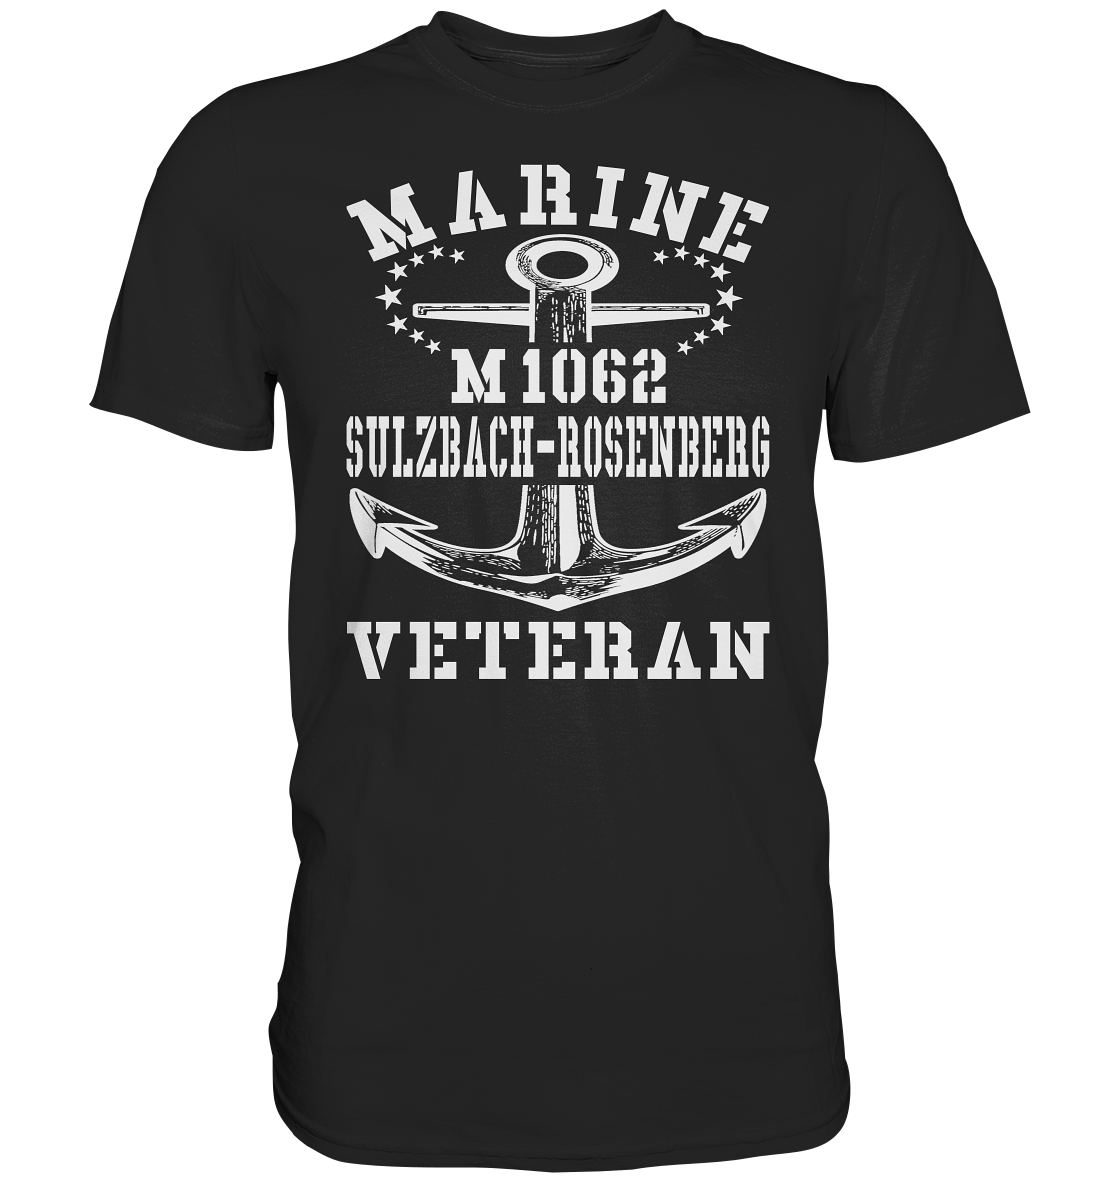 Mij.-Boot M1062 SULZBACH-ROSENBERG Marine Veteran - Premium Shirt